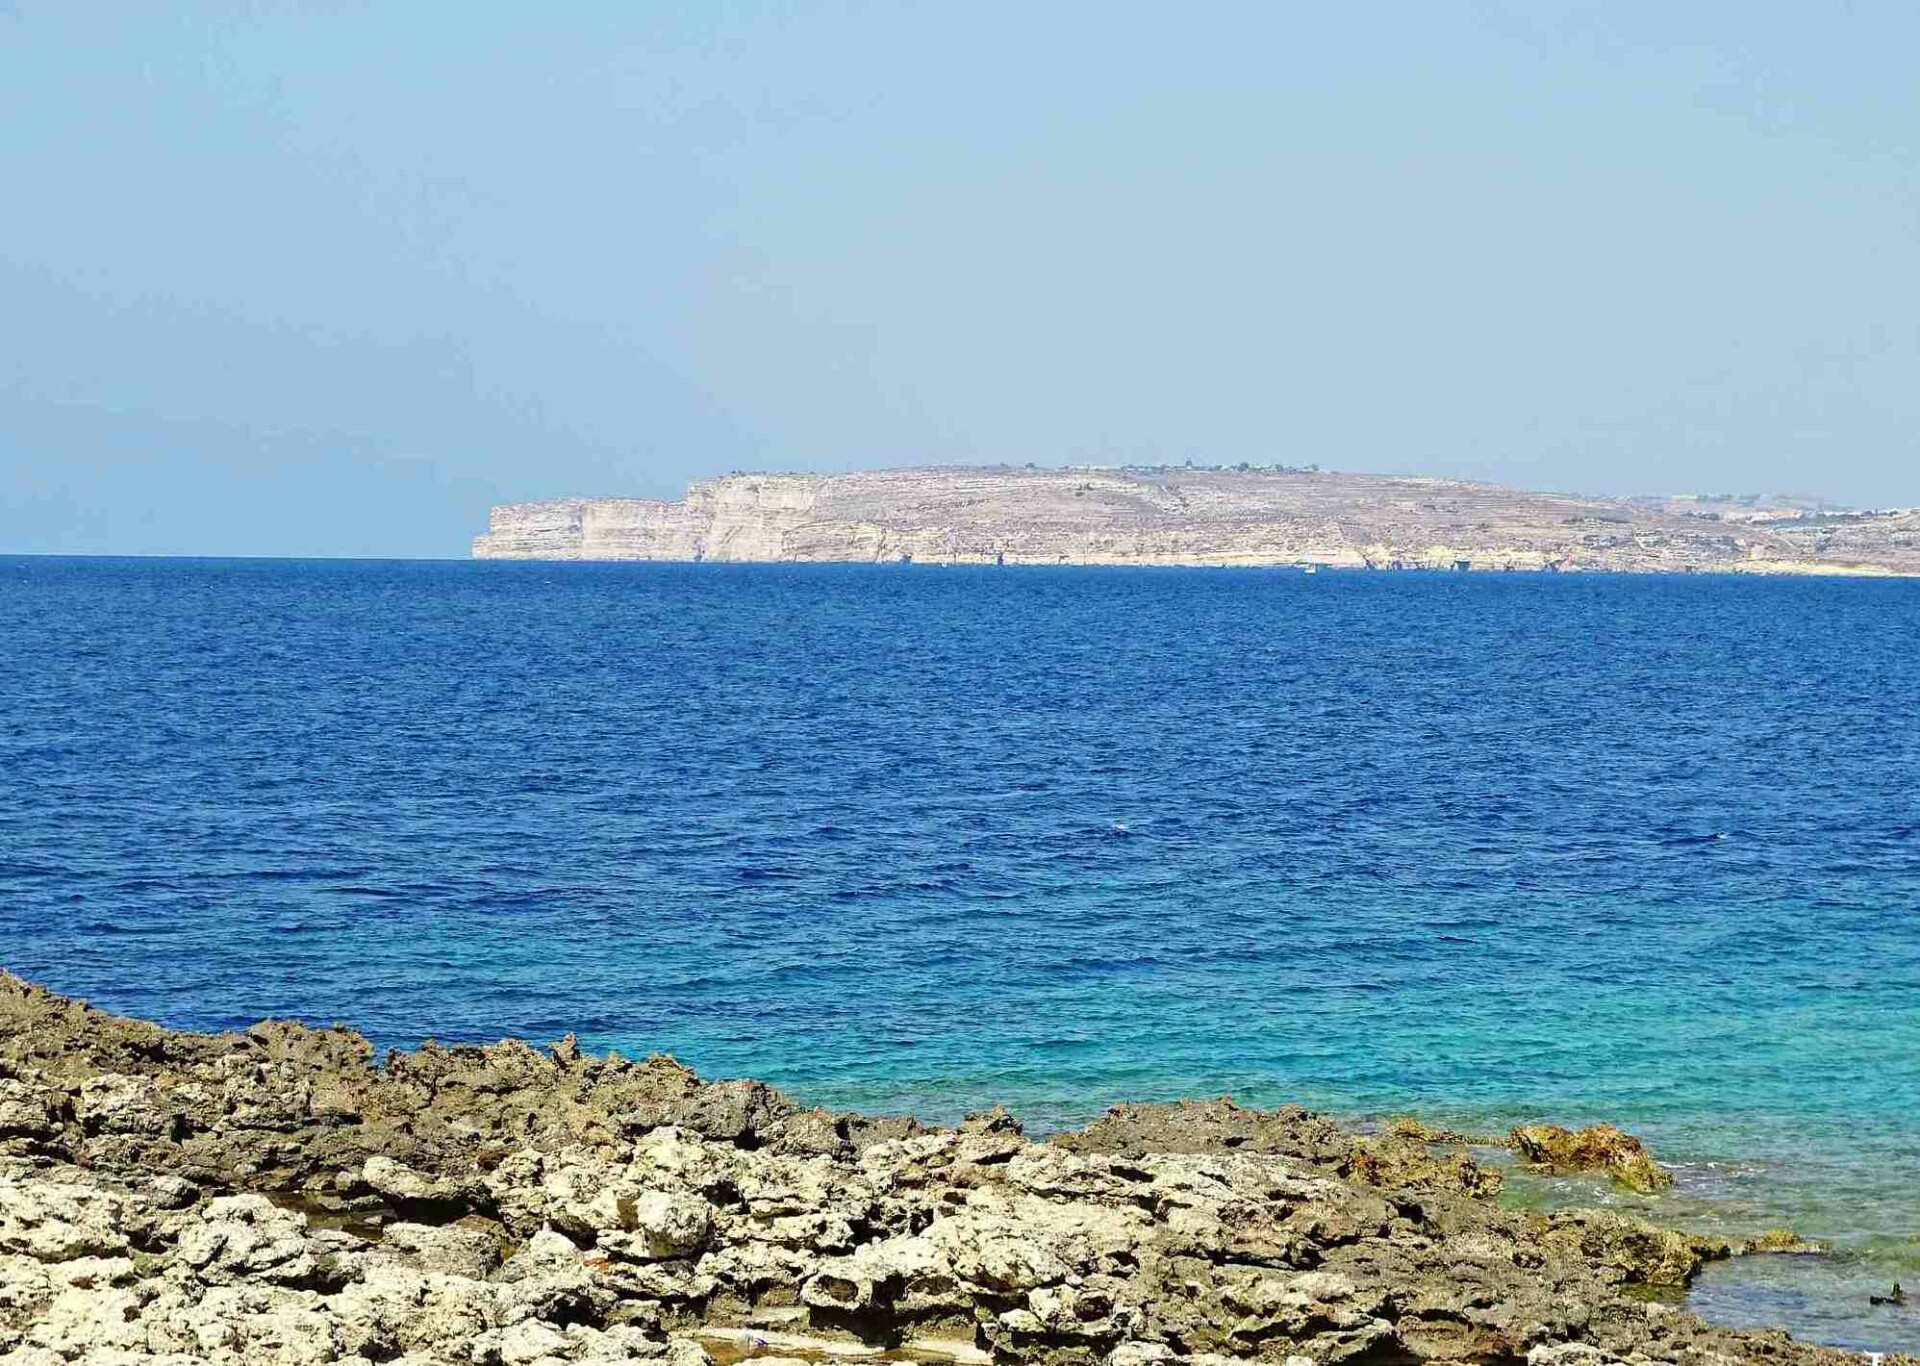 Duiker sterft, 17 gered op winderige kustduikplek in Malta